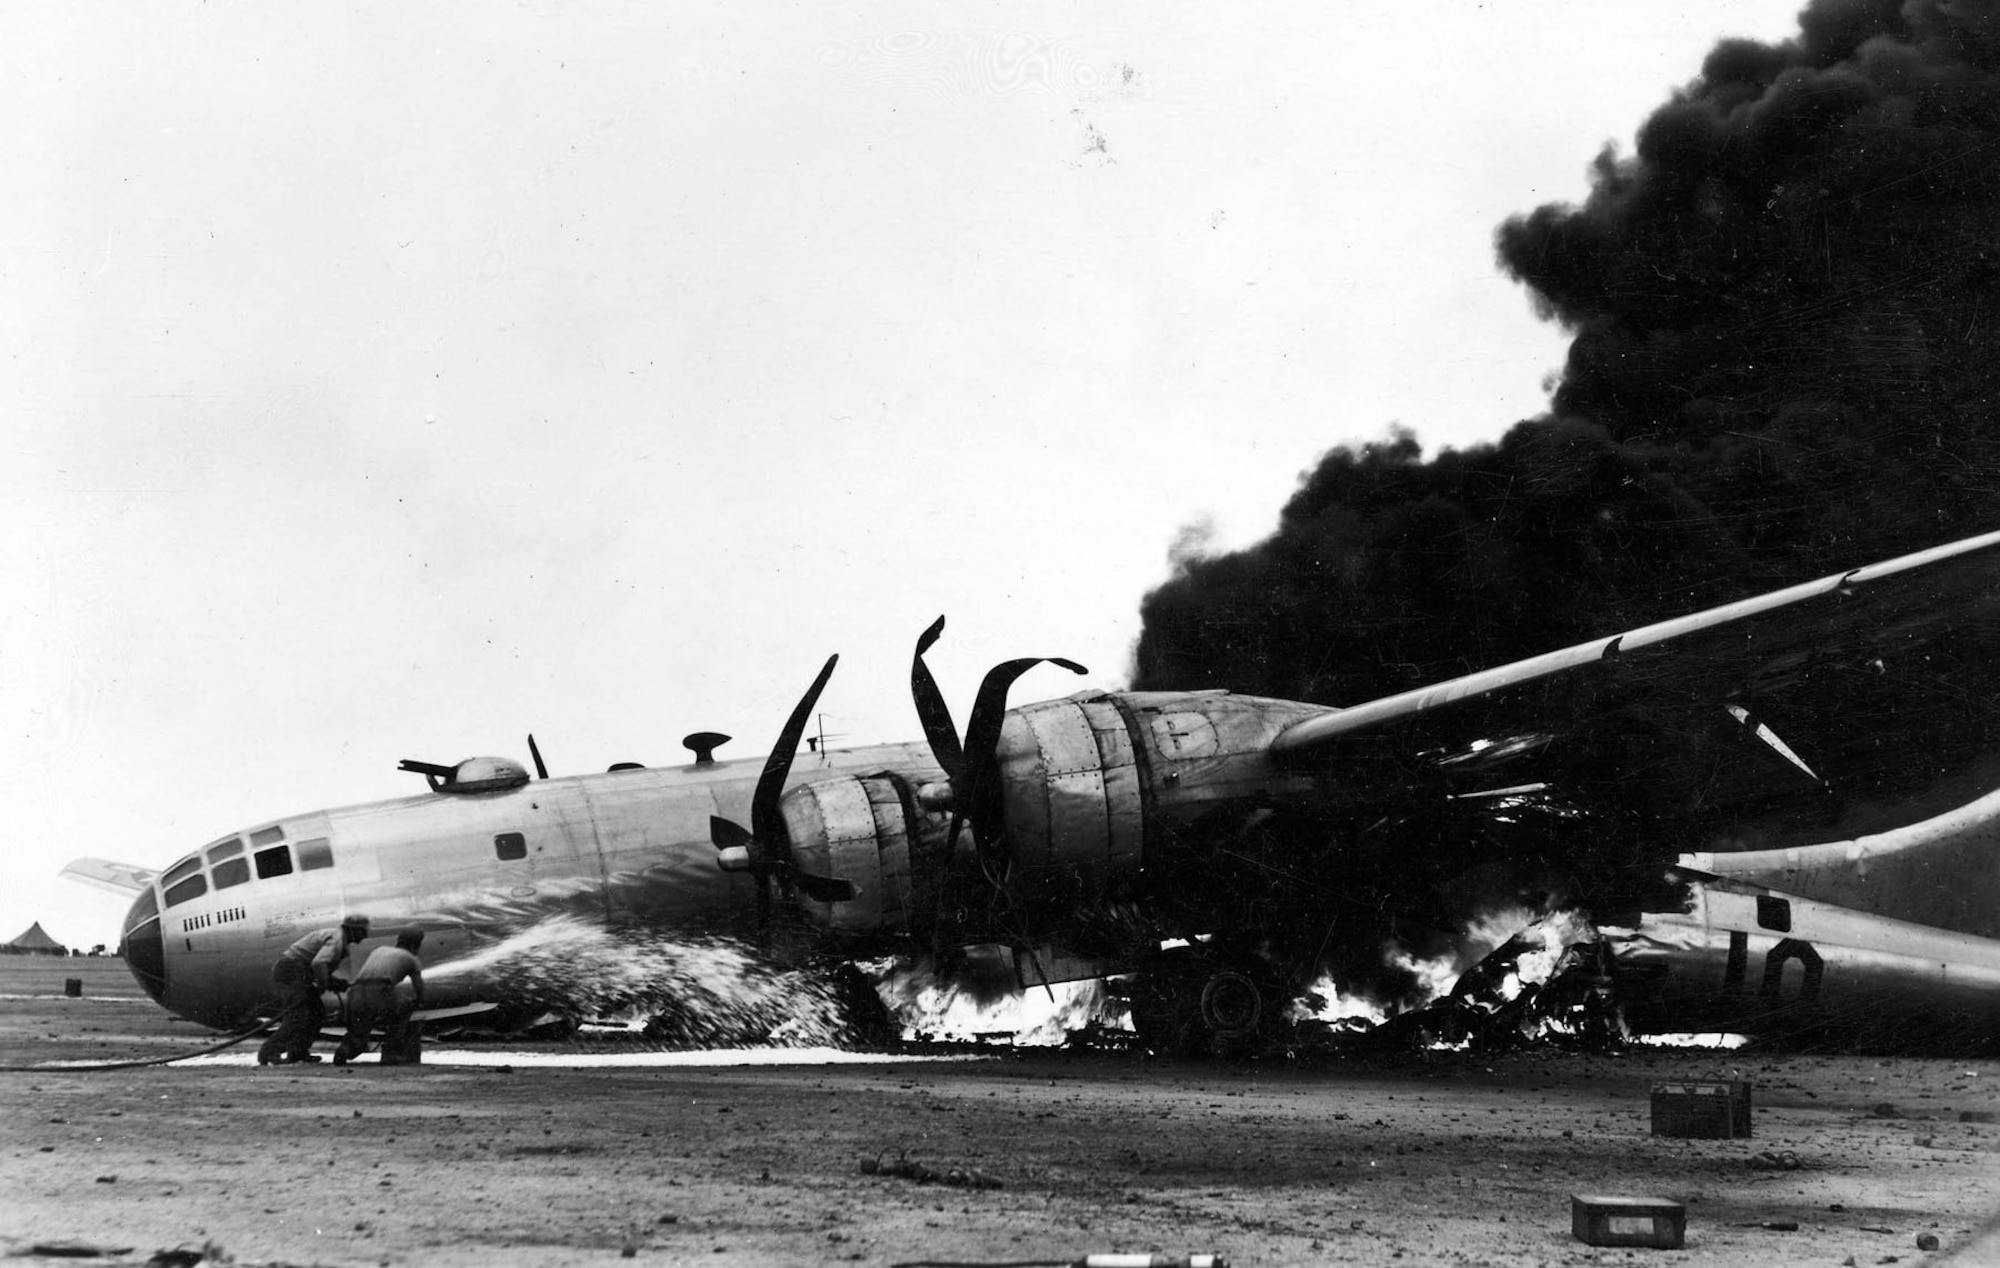 B-29 after an emergency landing at Iwo Jima. (U.S. Air Force photo)